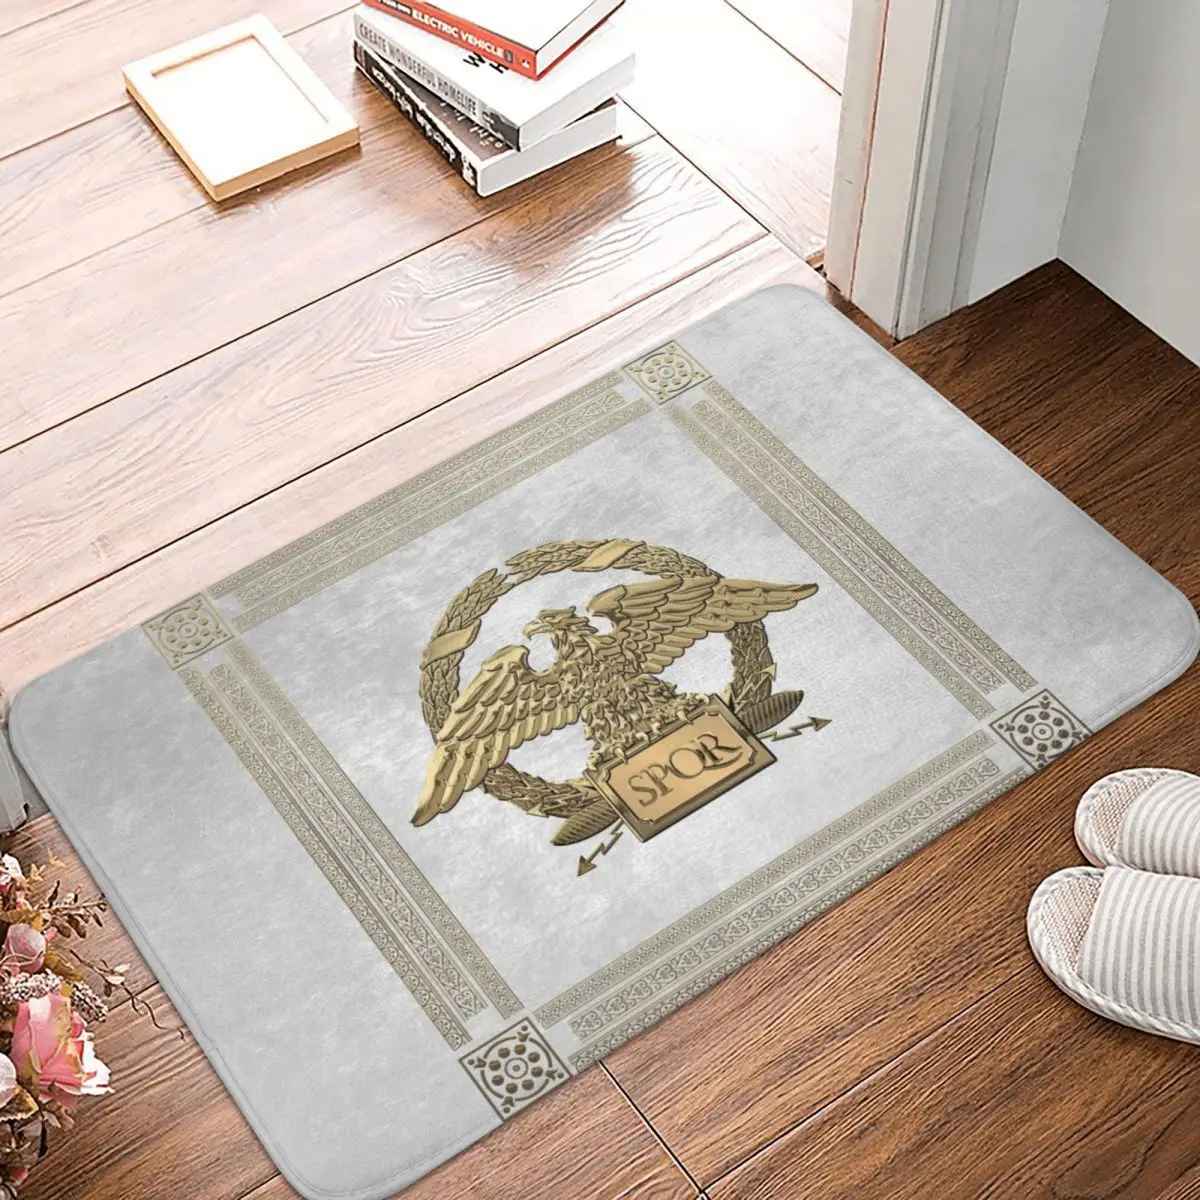 

Roman Imperial Eagle Doormat Carpet Mat Rug Polyester PVC Non-Slip Floor Decor Bath Bathroom Kitchen Living Room 40x60